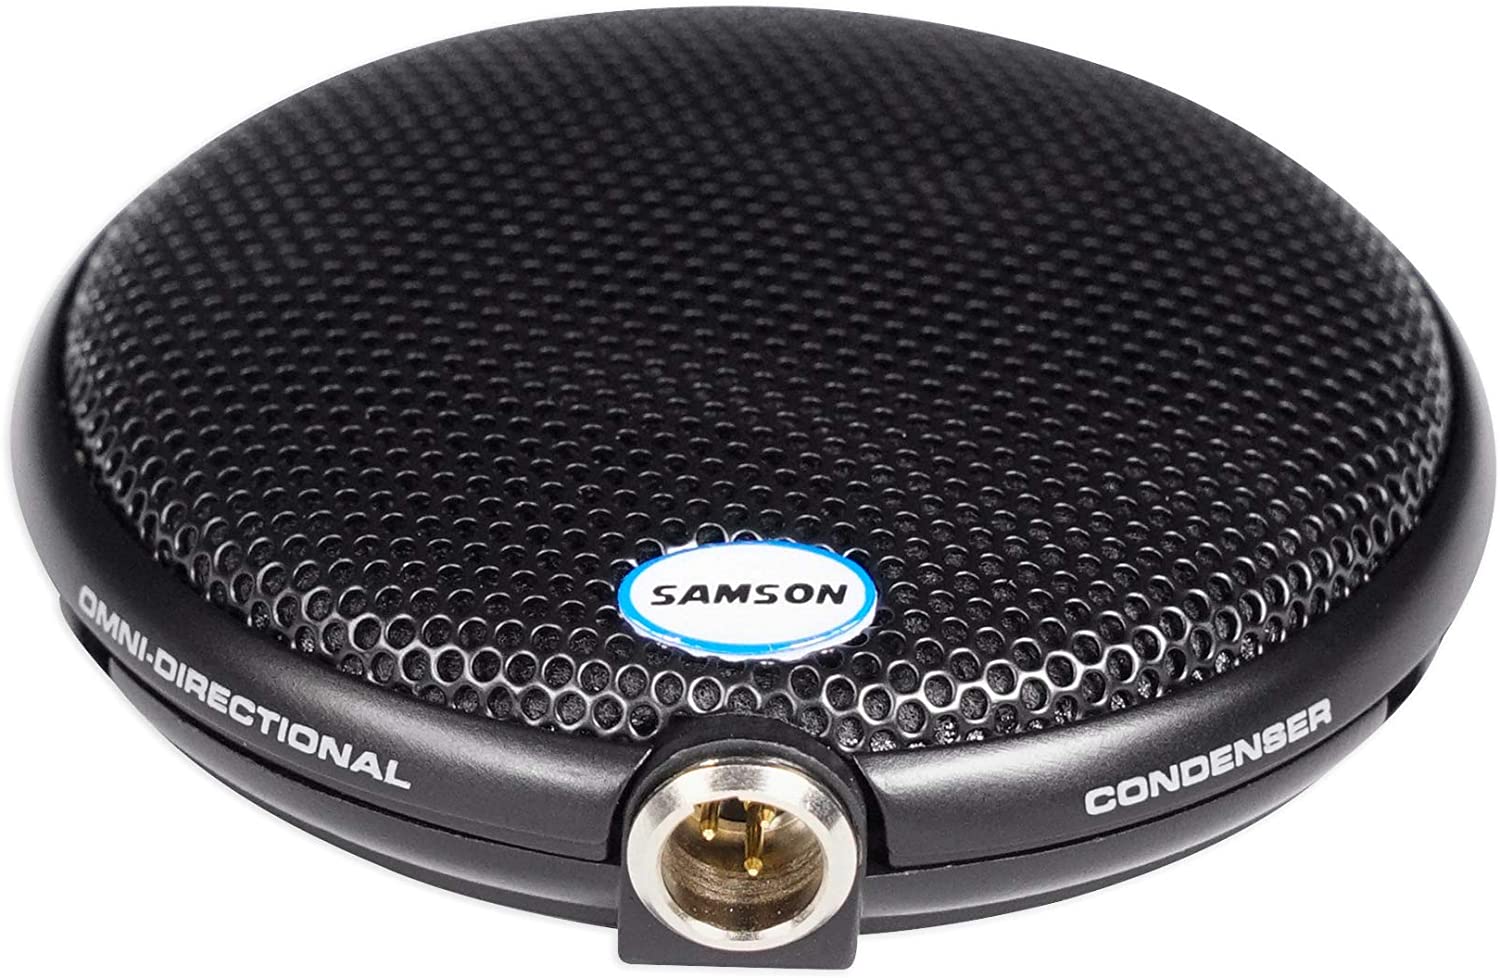 Samson CM11B Omnidirectional Boundary Microphone